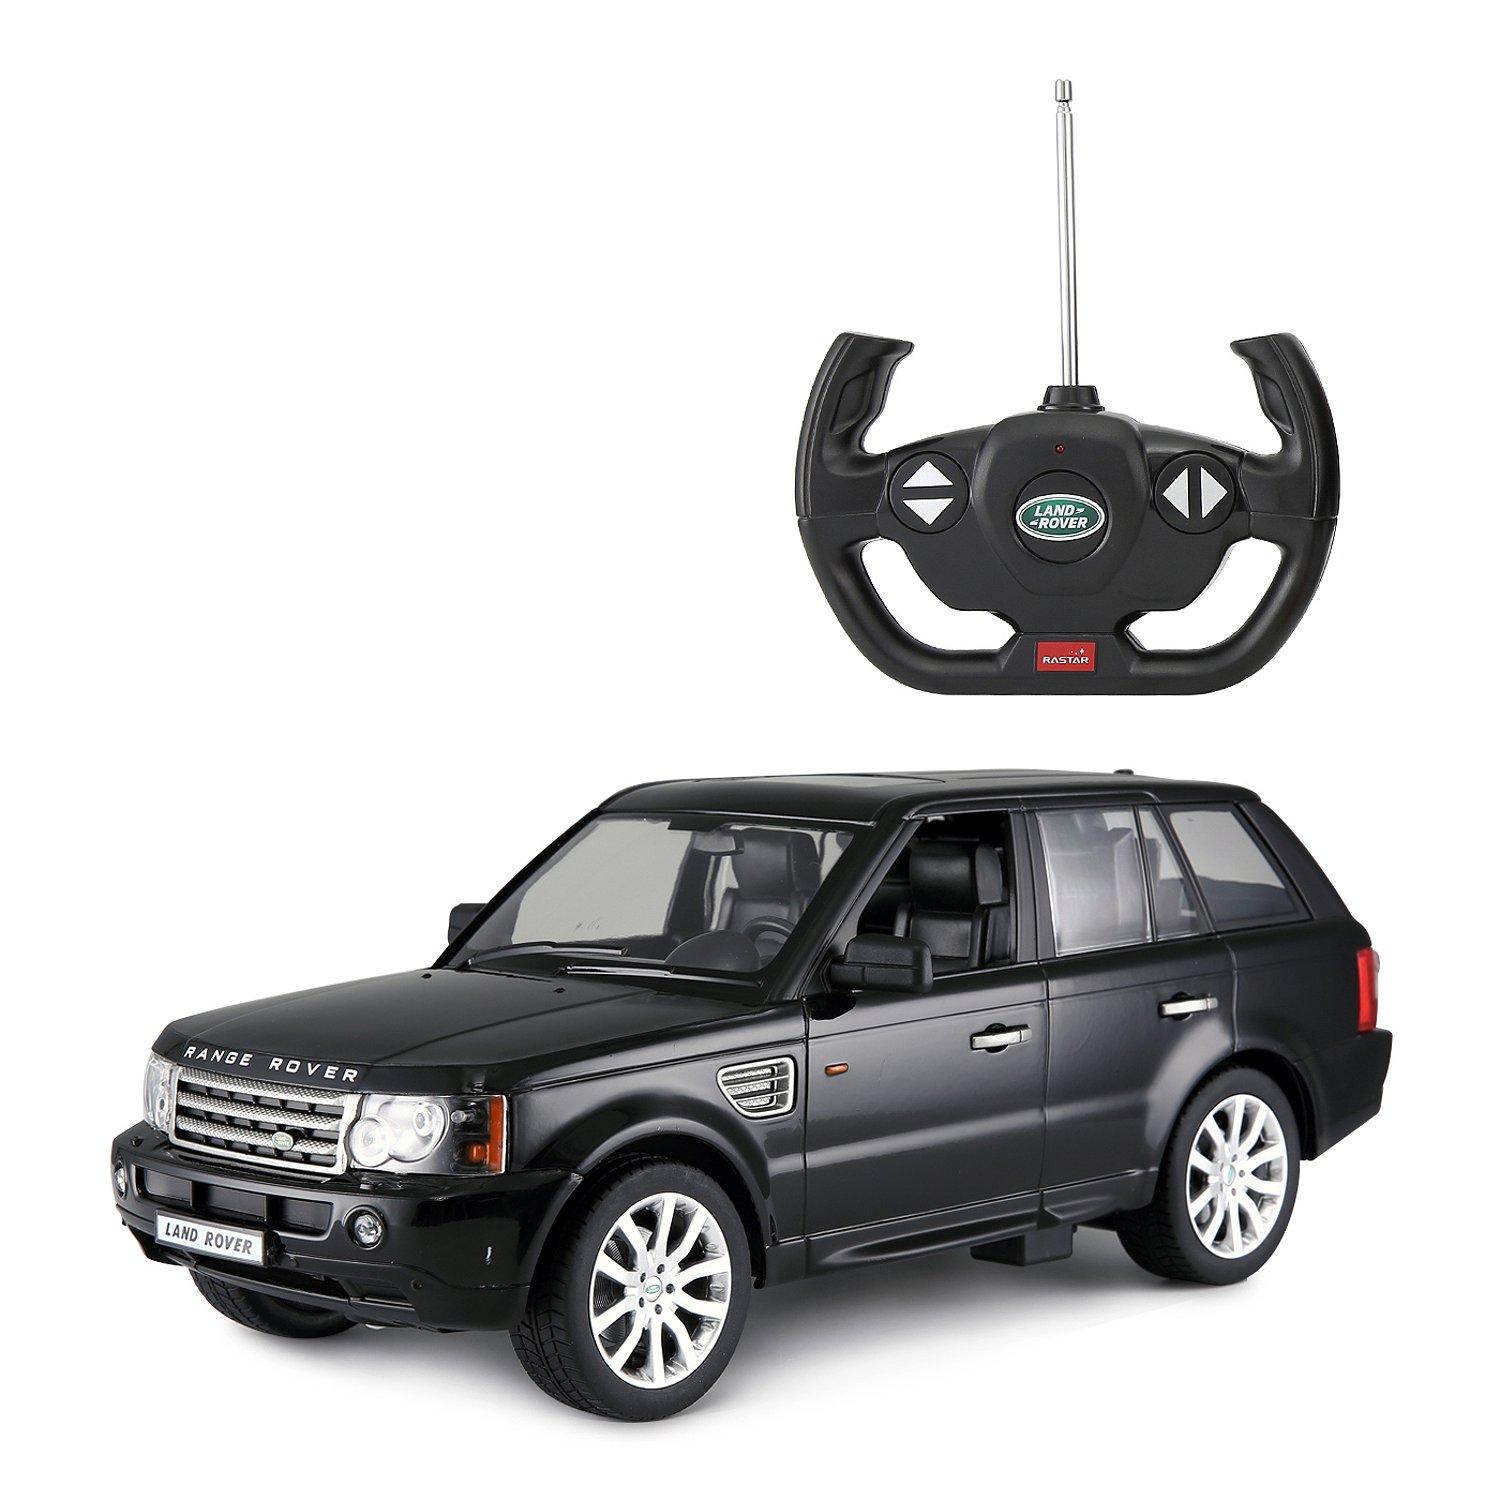 Rastar Машина на радиоуправлении 1:14 Range Rover Sport, цвет – черный rastar машина на радиоуправлении mini 1 24